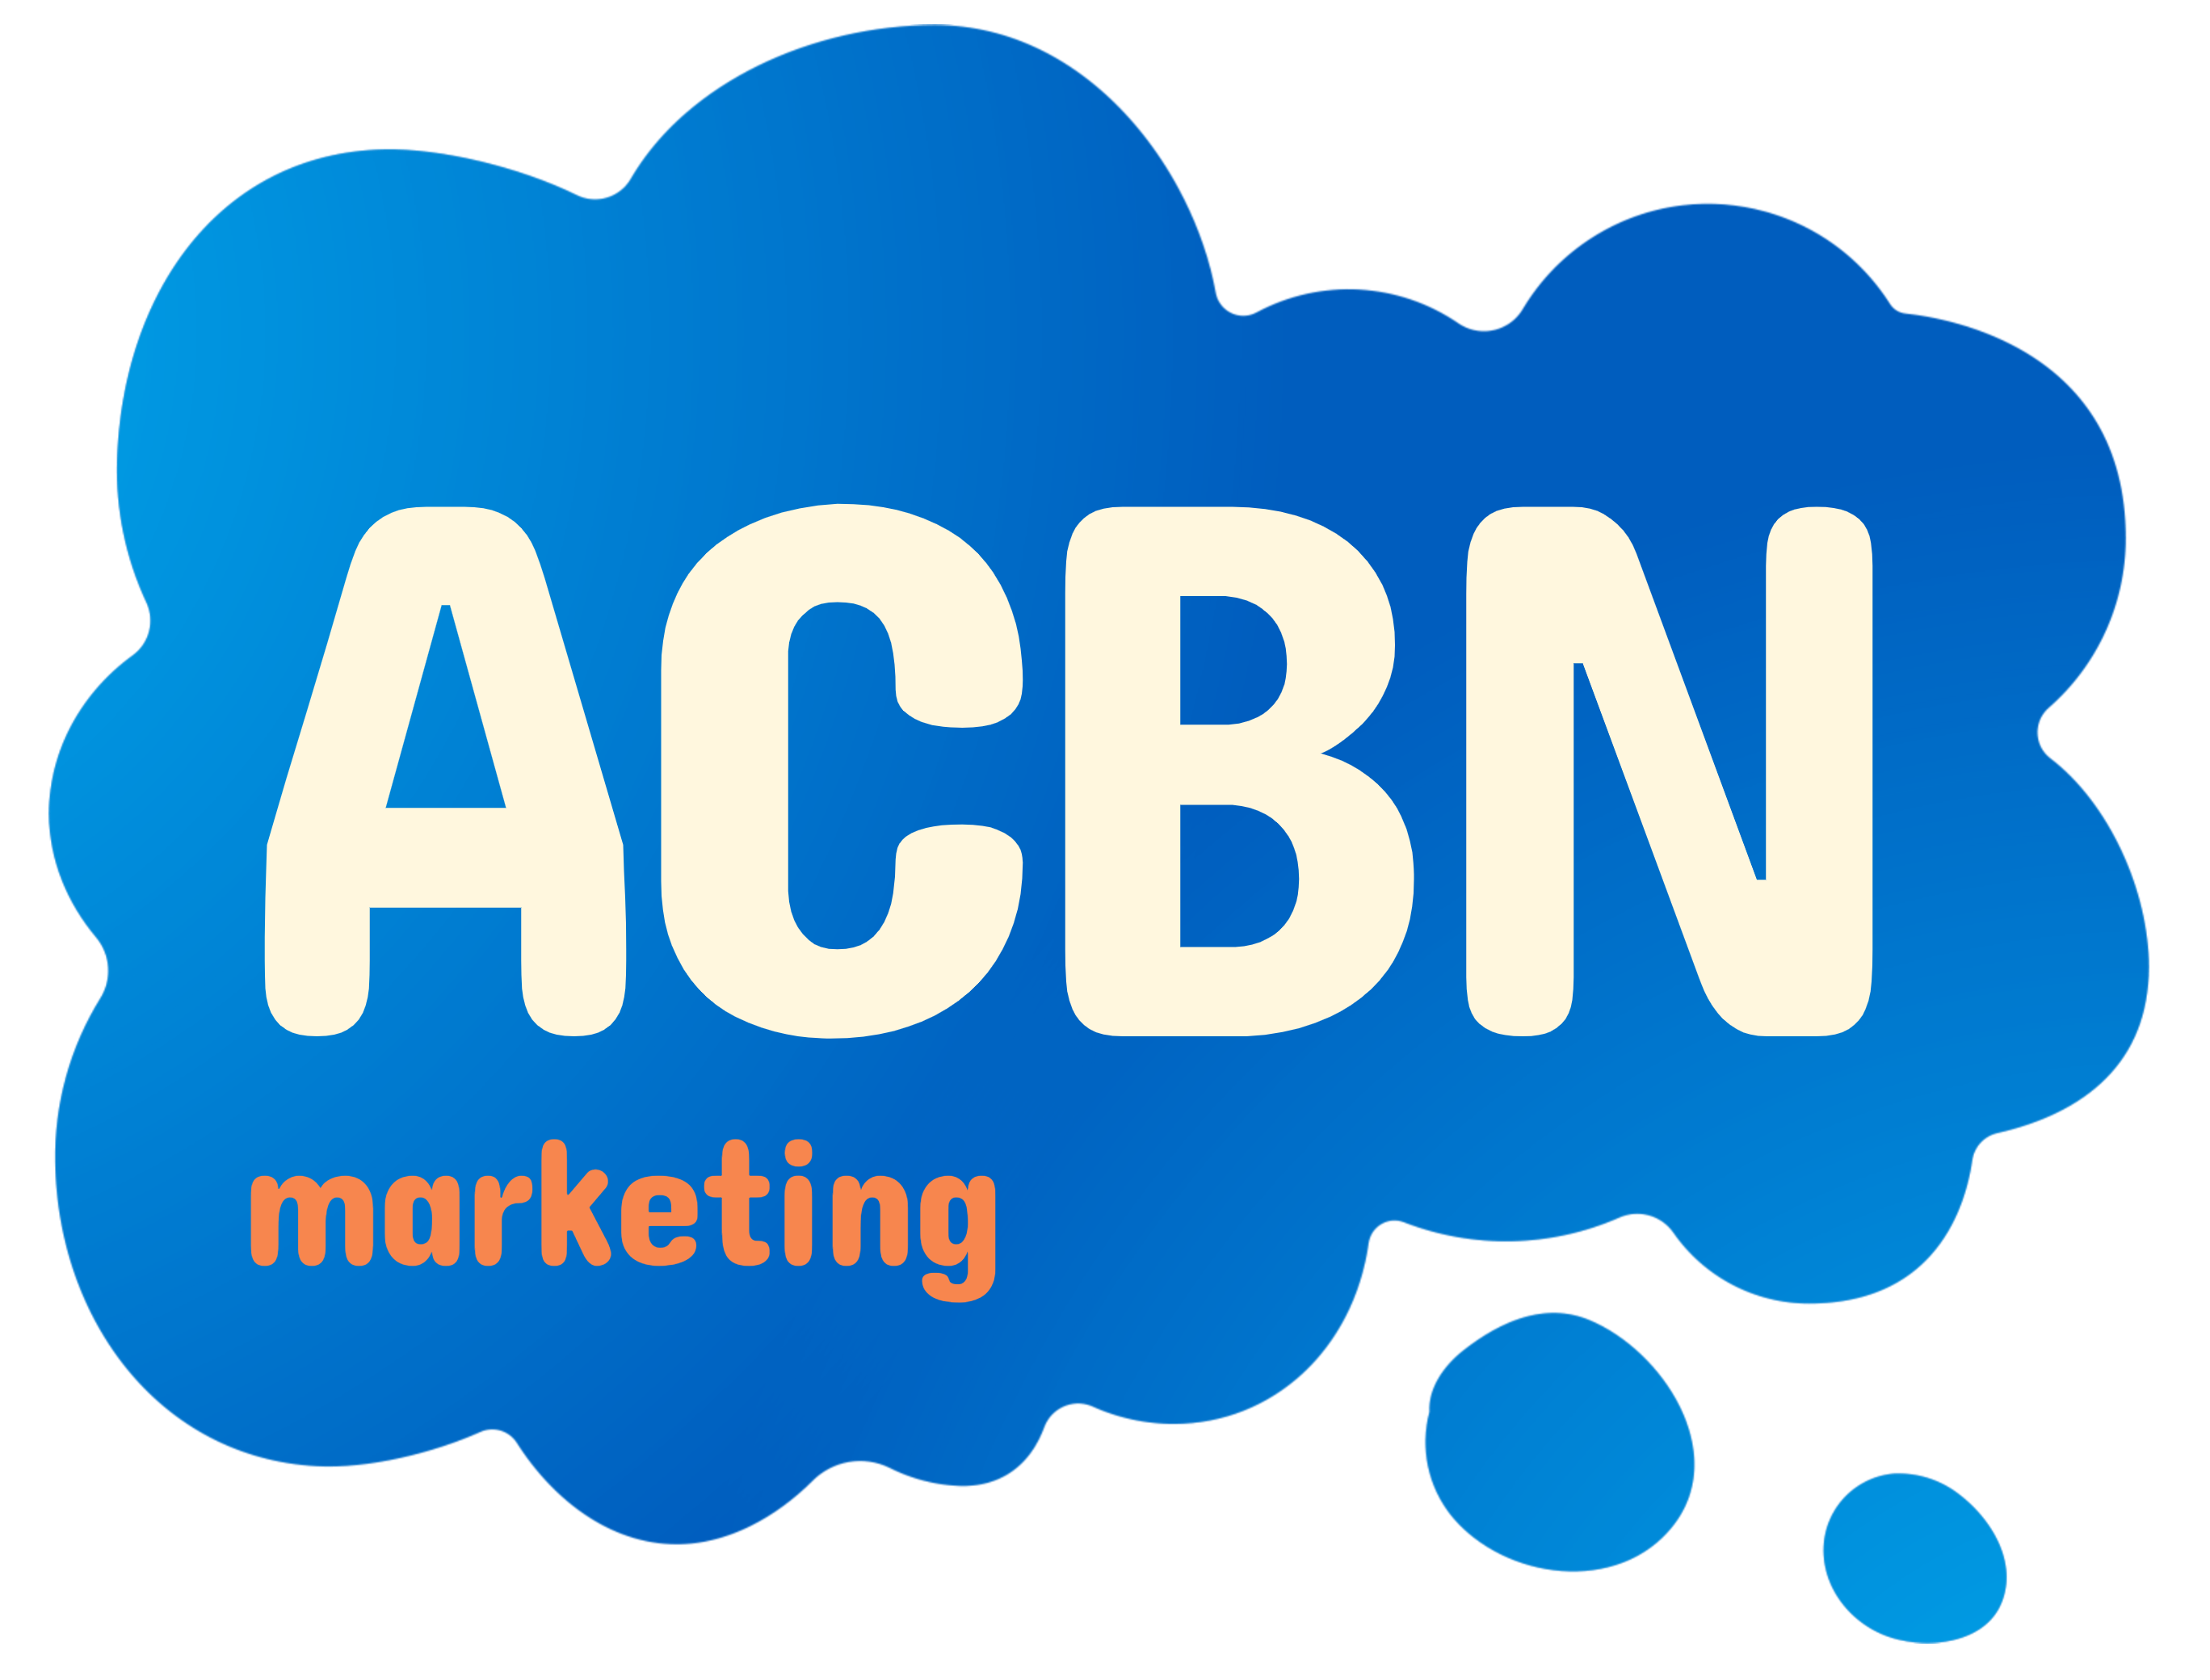 ACBN Marketing